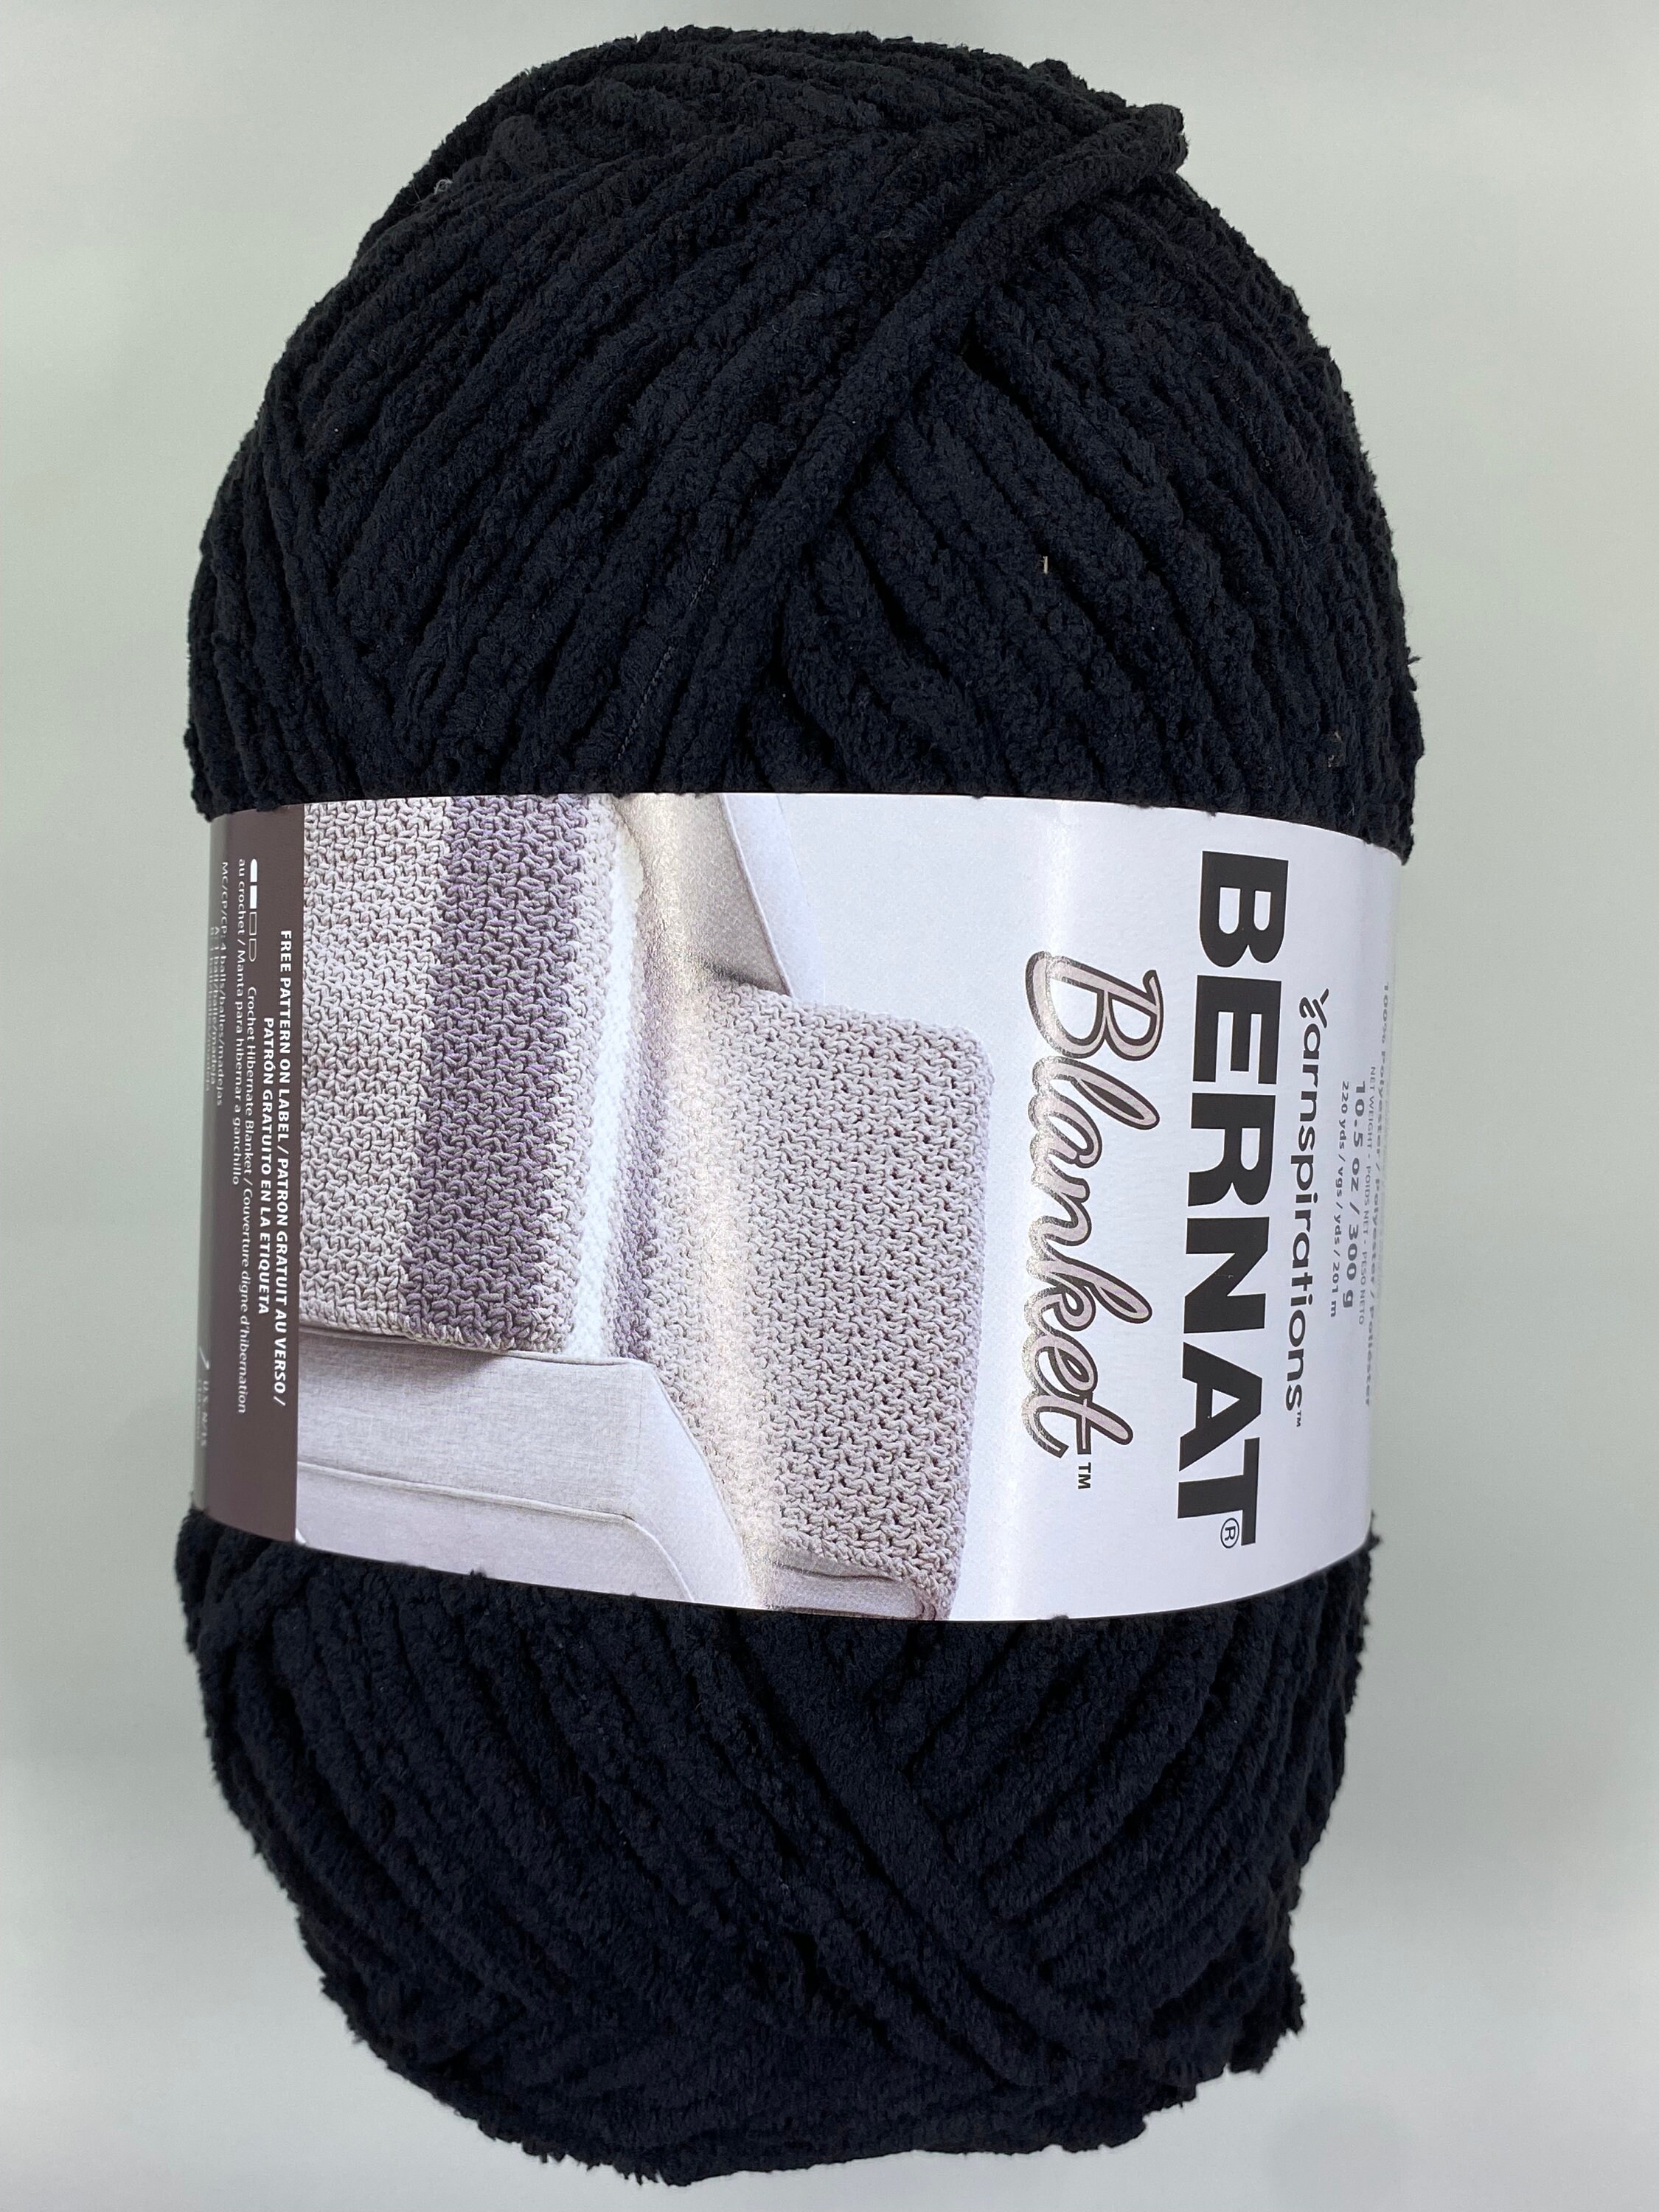 BERNAT Blanket 'Big', Misty Grey, 300g